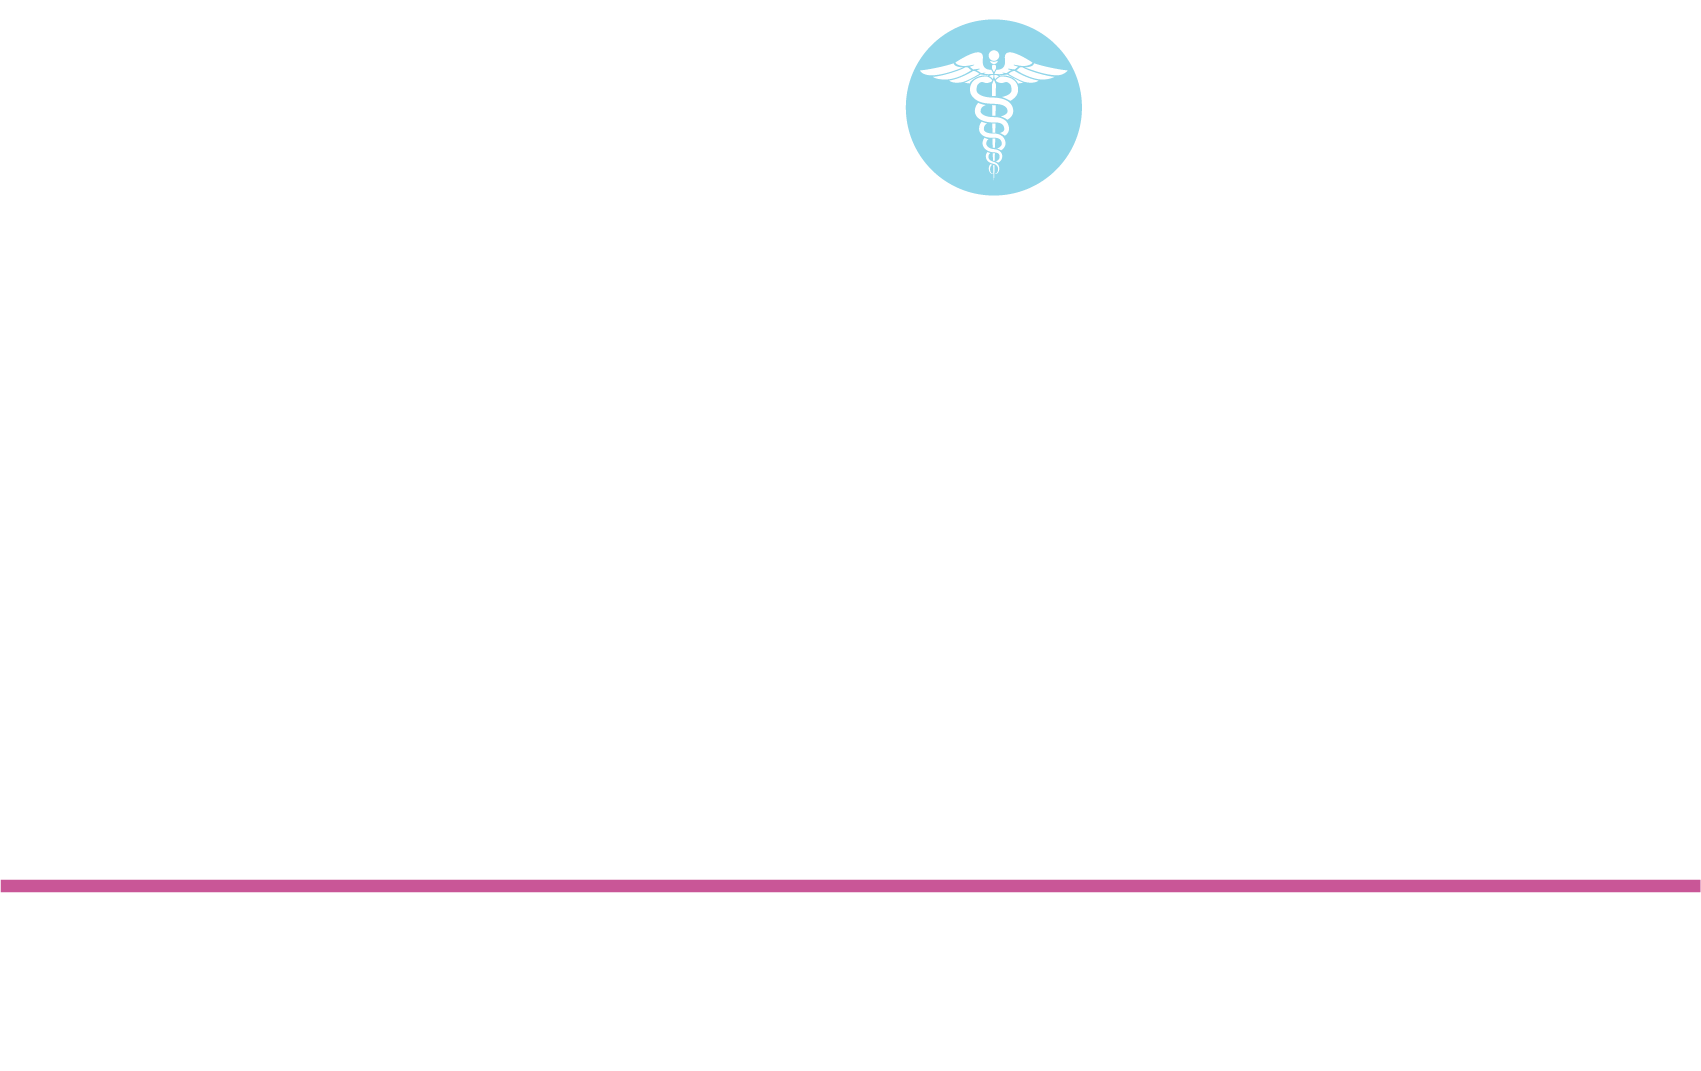 Upsing Telespychiatry Services logo - Connect Establish Heal